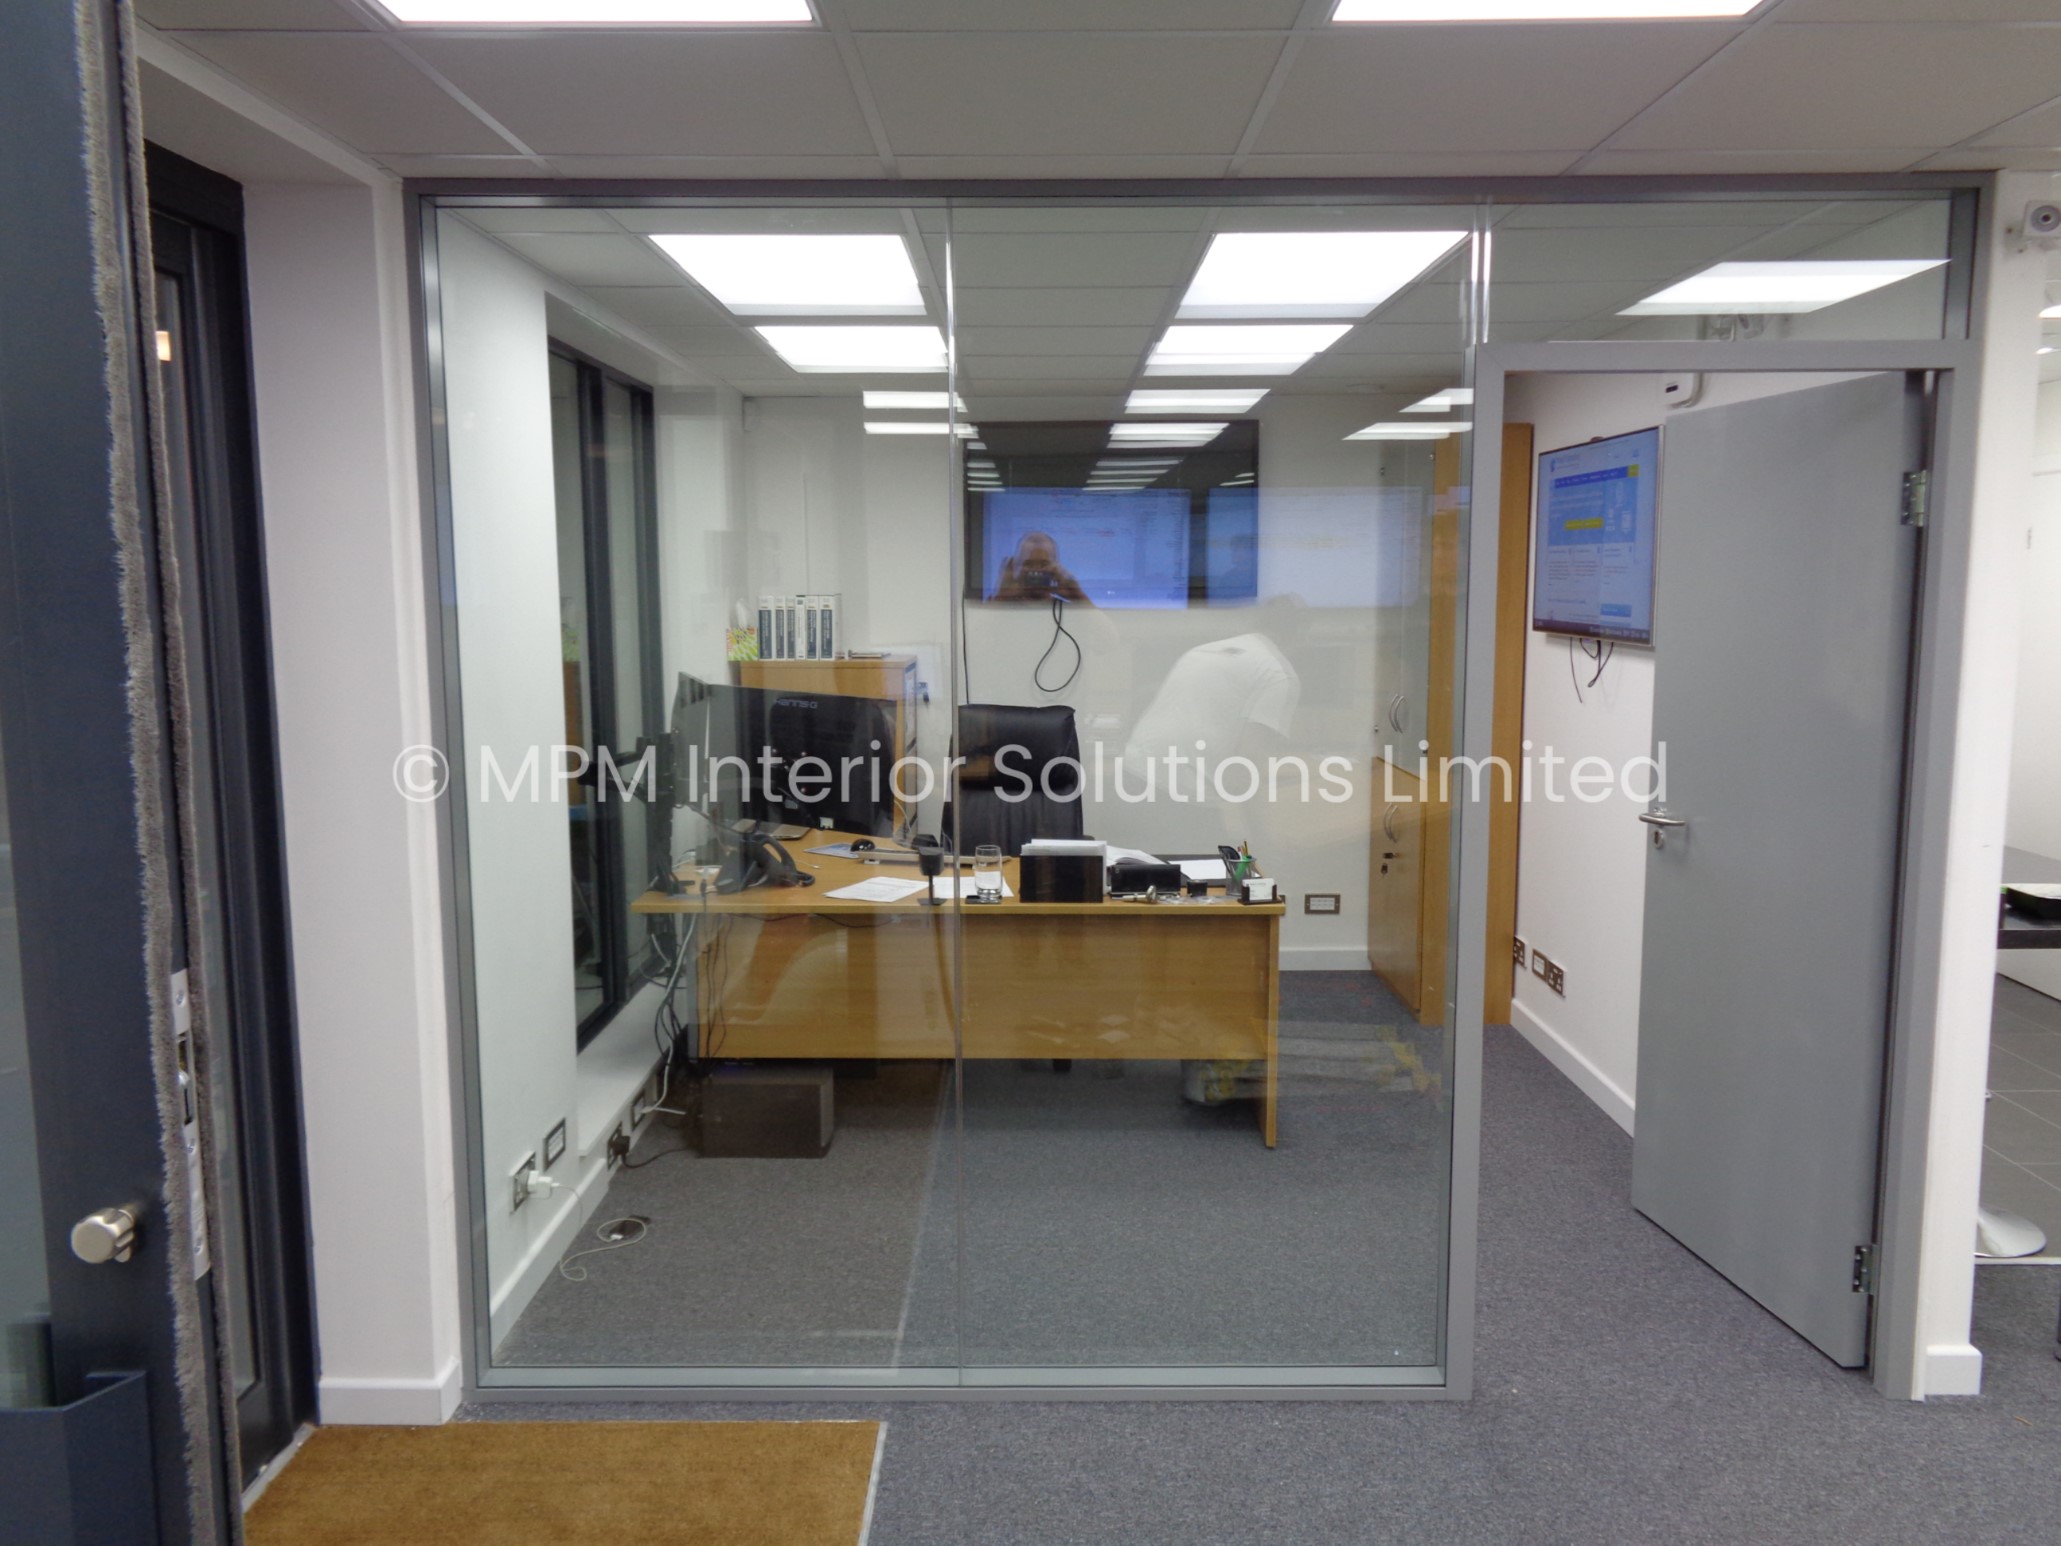 Frameless Glass Office Partitioning, Proxar IT Consulting Ltd (Sevenoaks, Kent), MPM Interior Solutions Limited